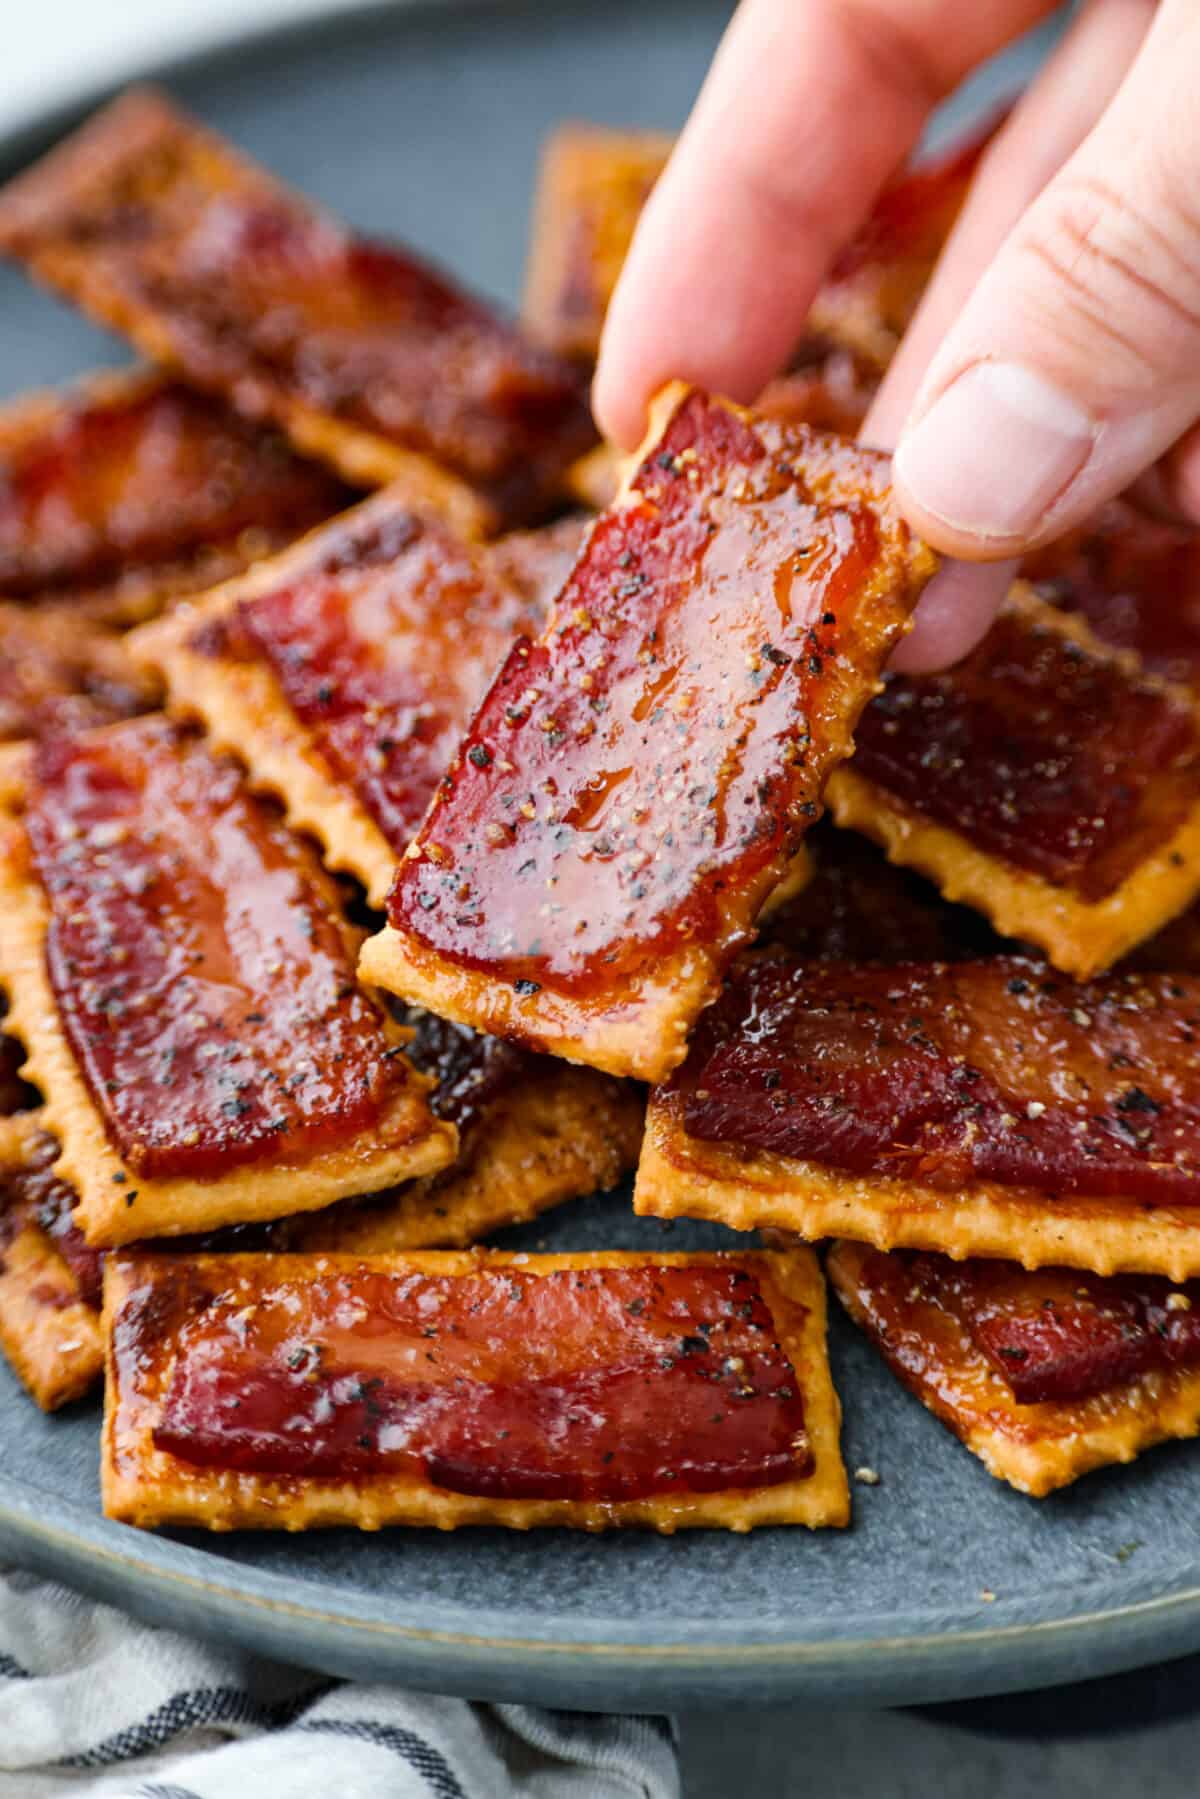 Bacon Crackers